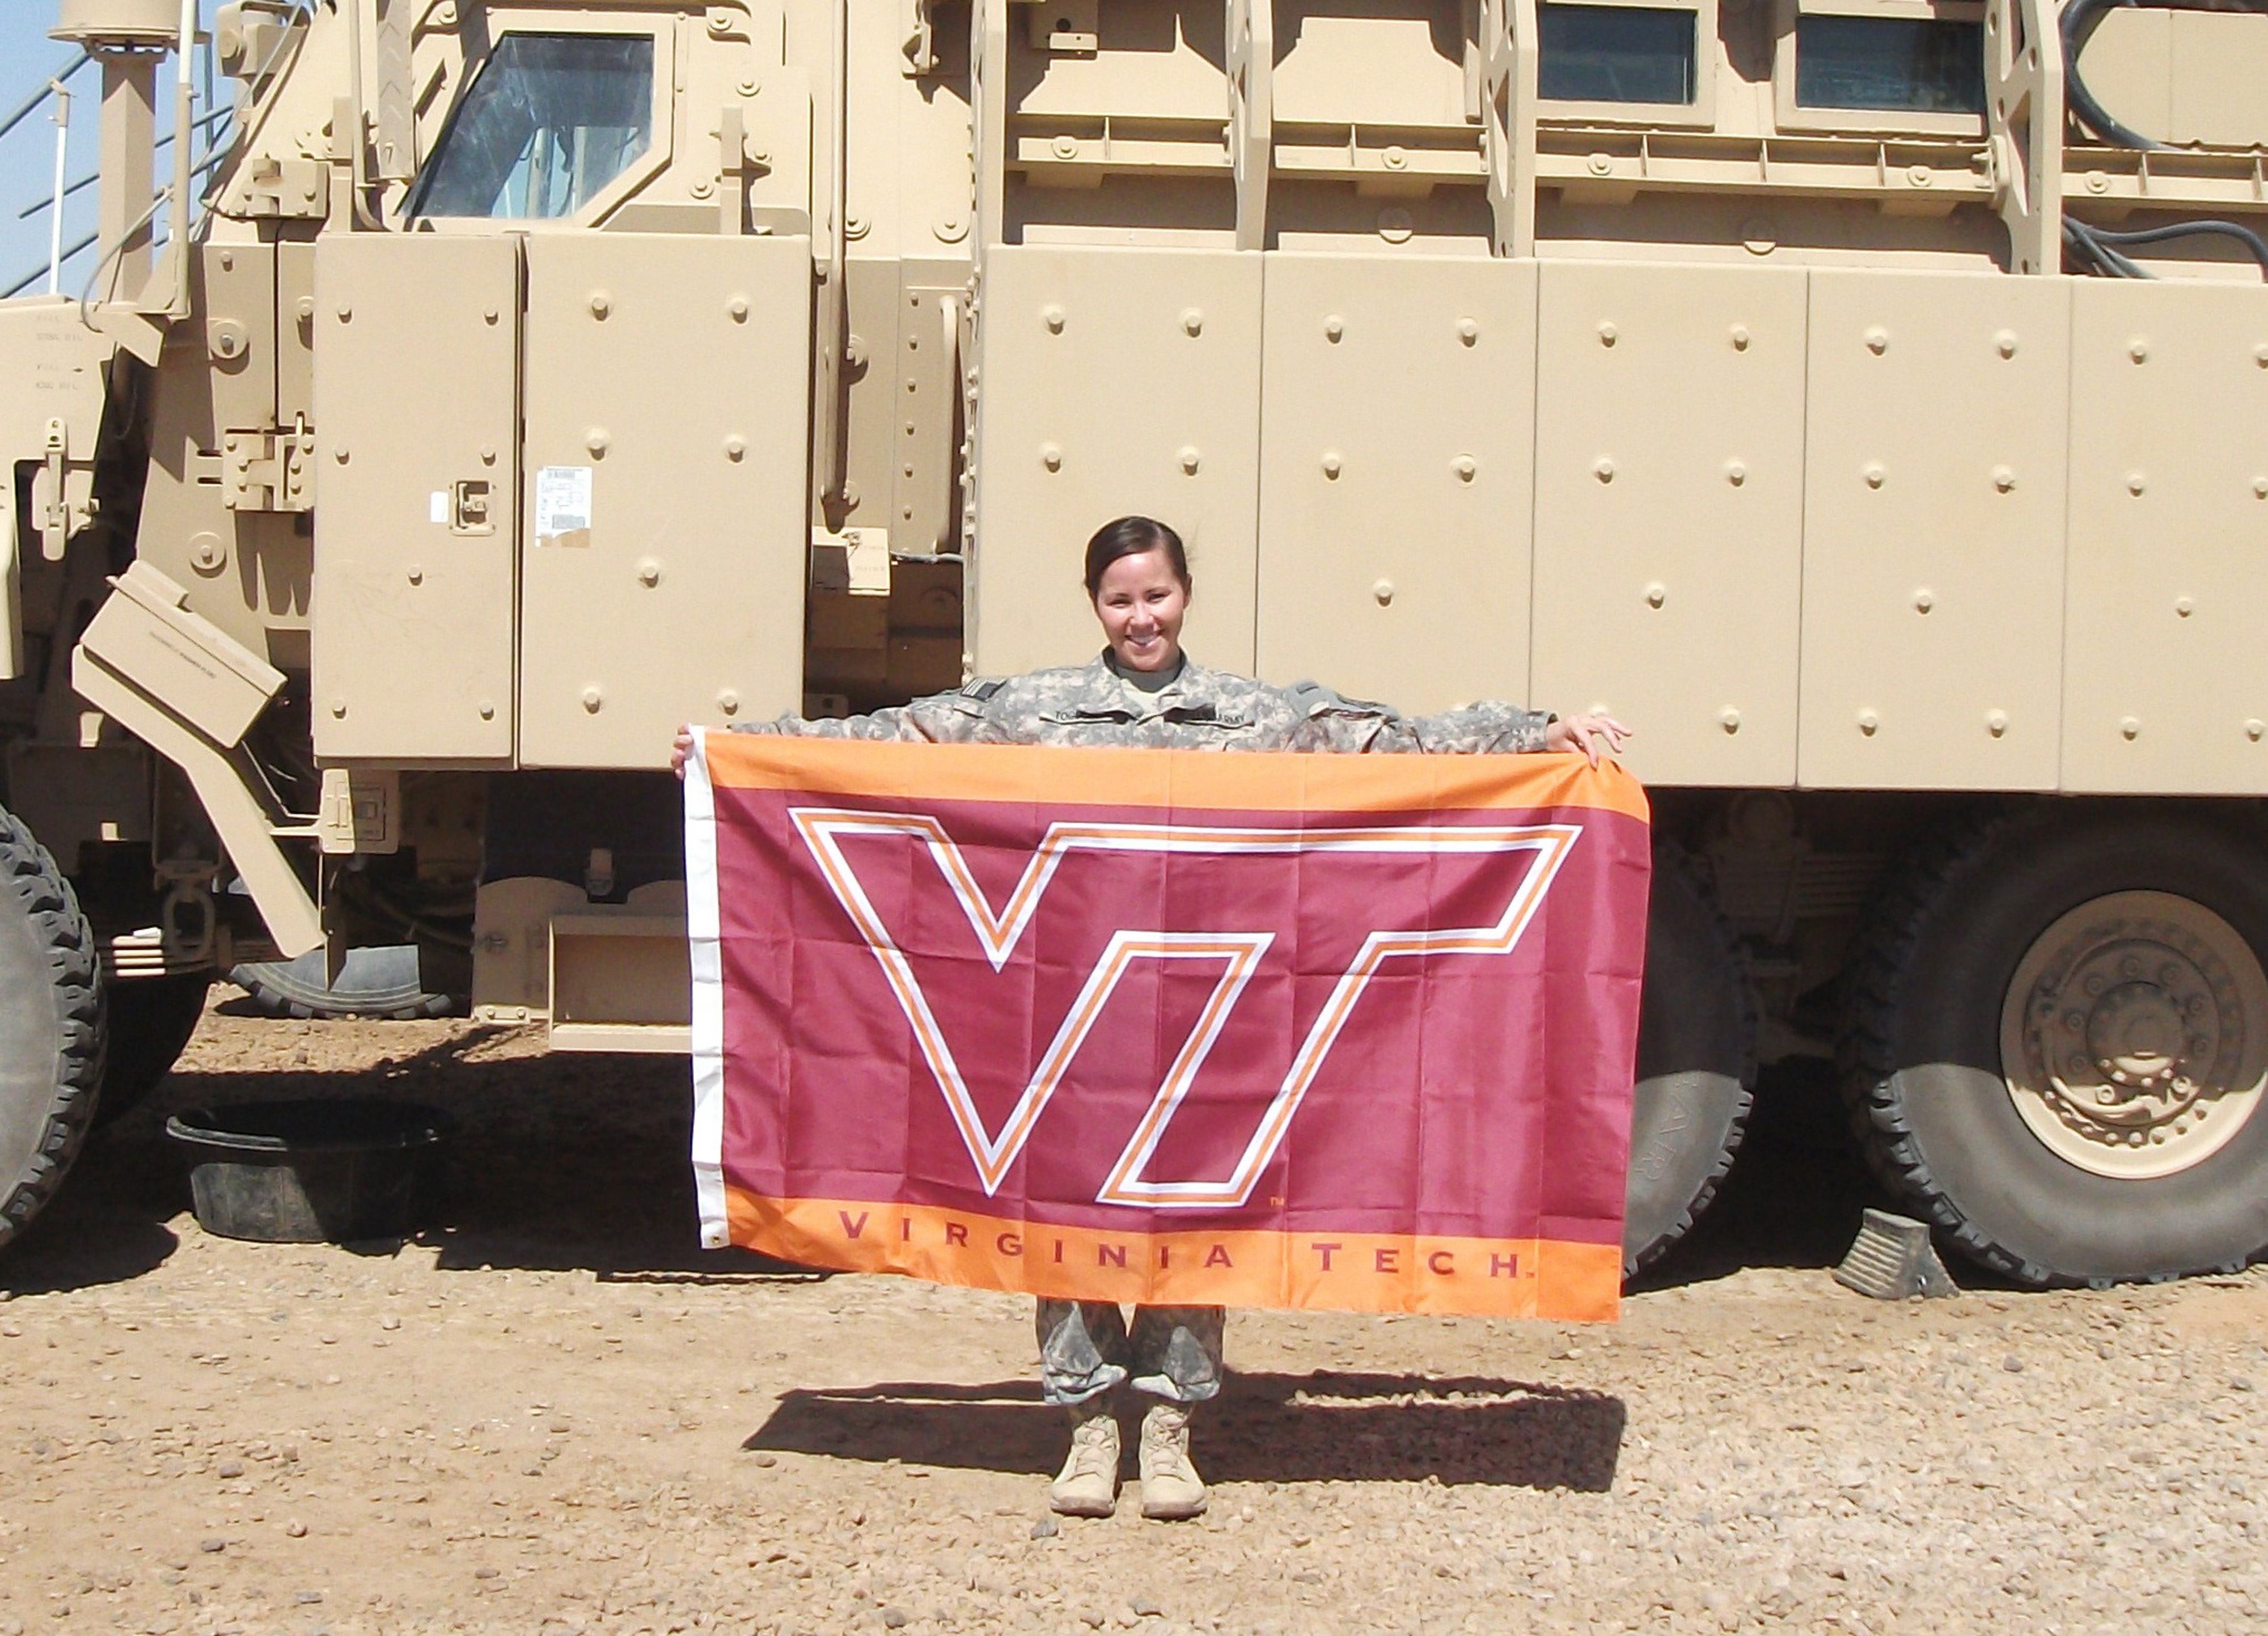 2nd Lt. Ashleigh Toguchi, U.S. Army, Virginia Tech Corps of Cadets Class of 2010 shown in Iraq